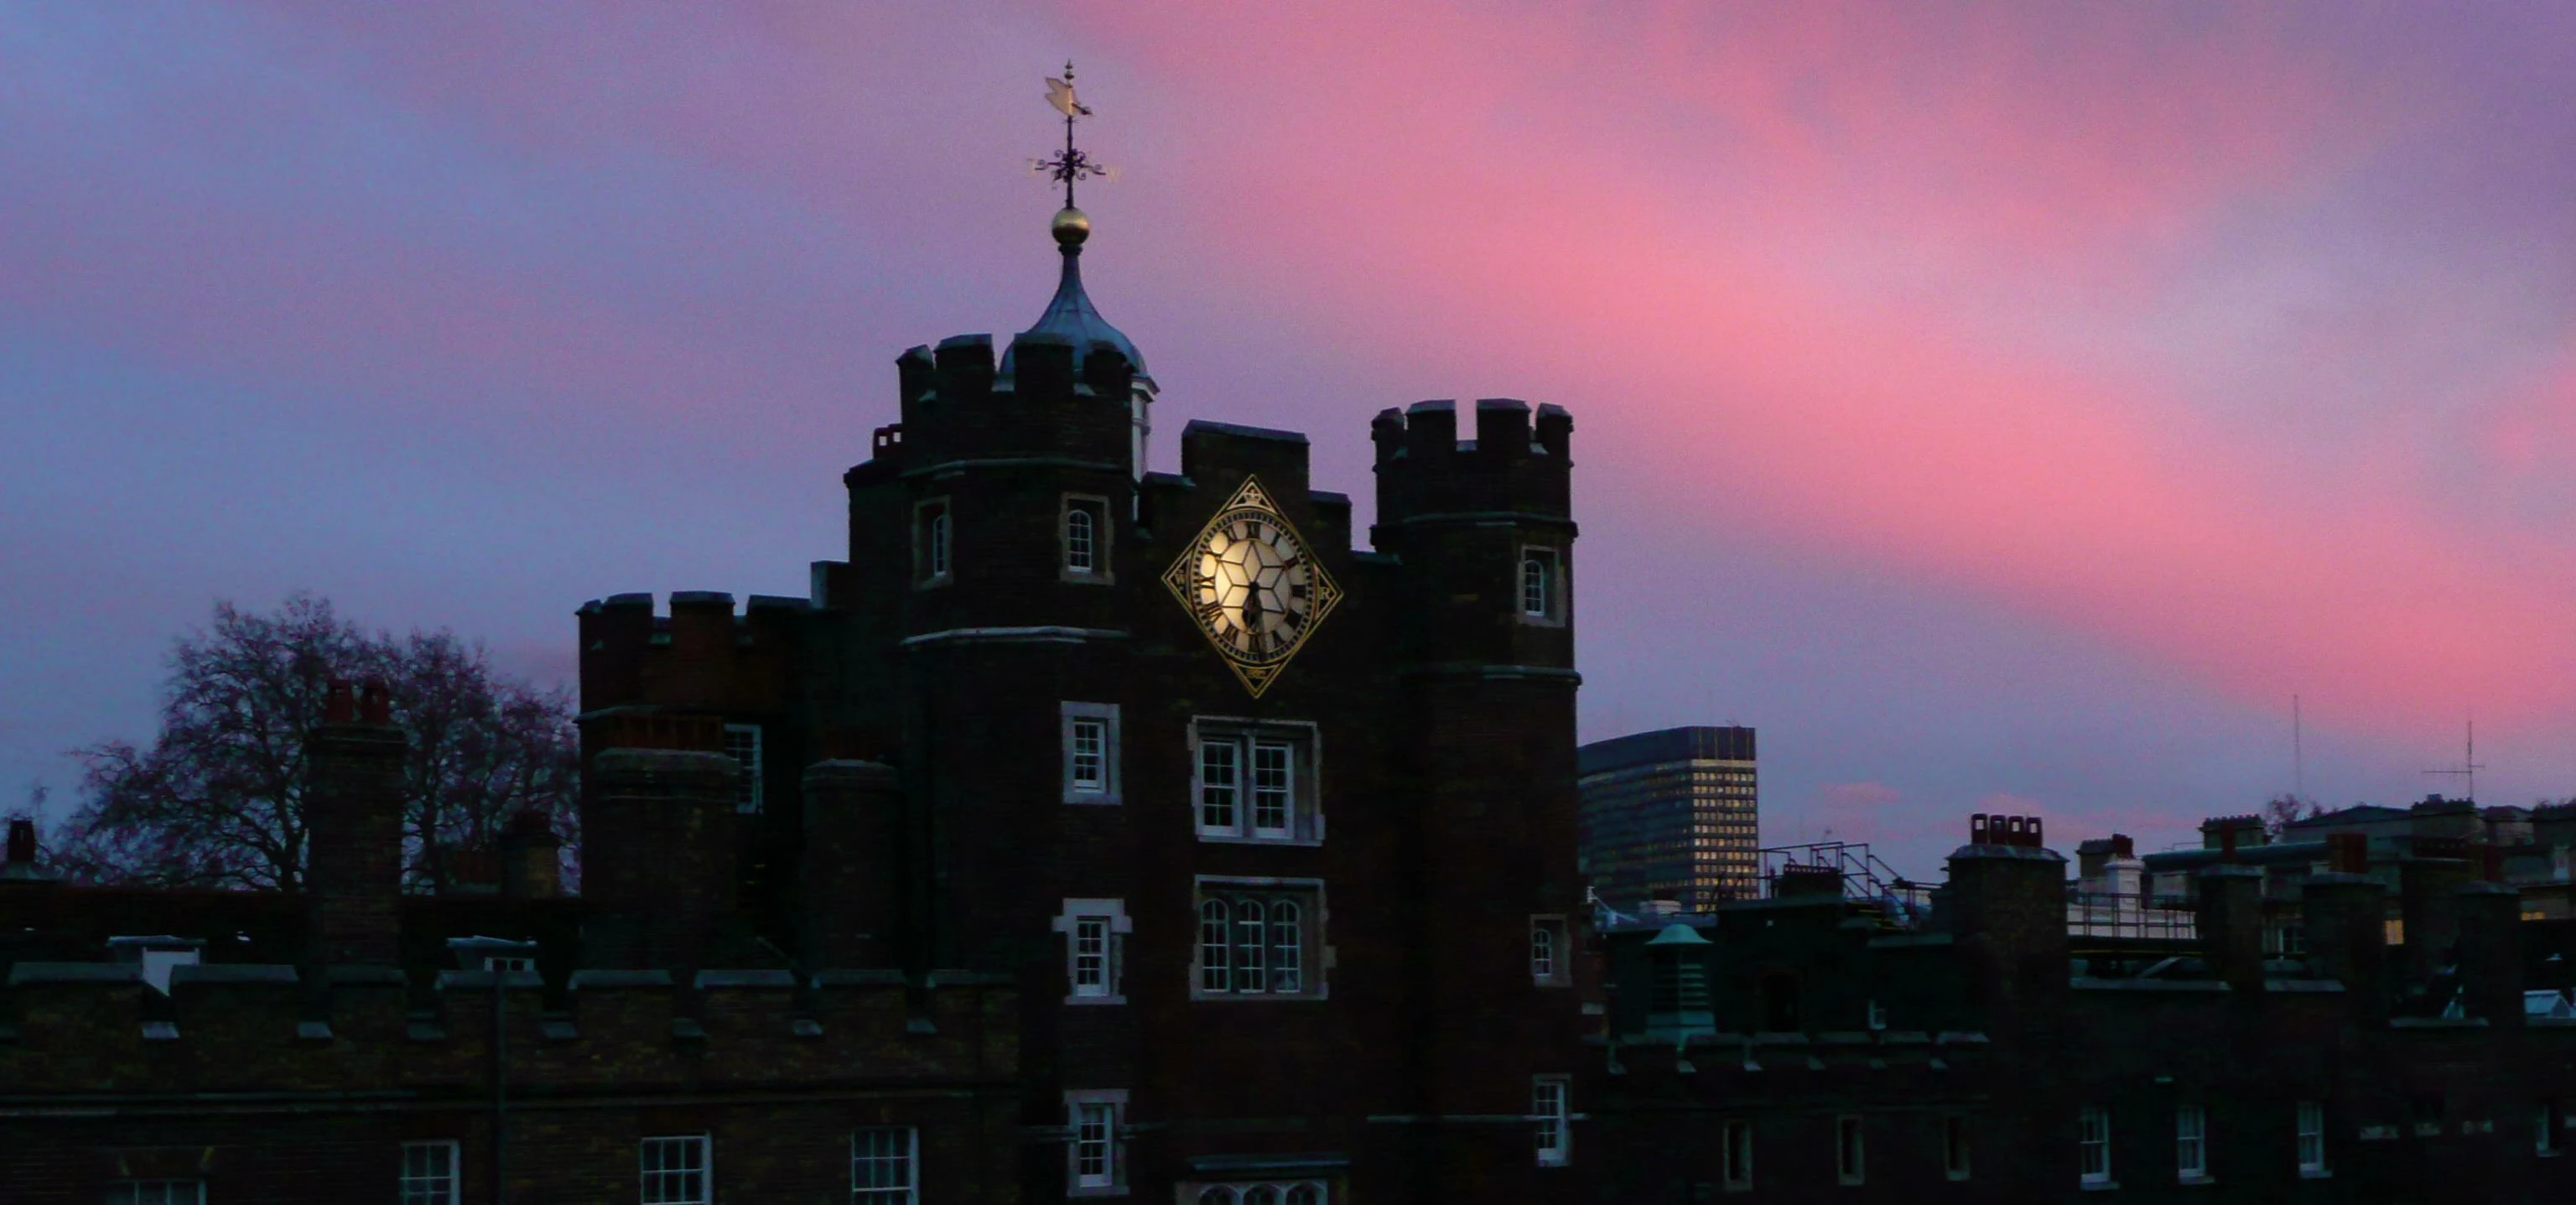 St James's Palace at dusk